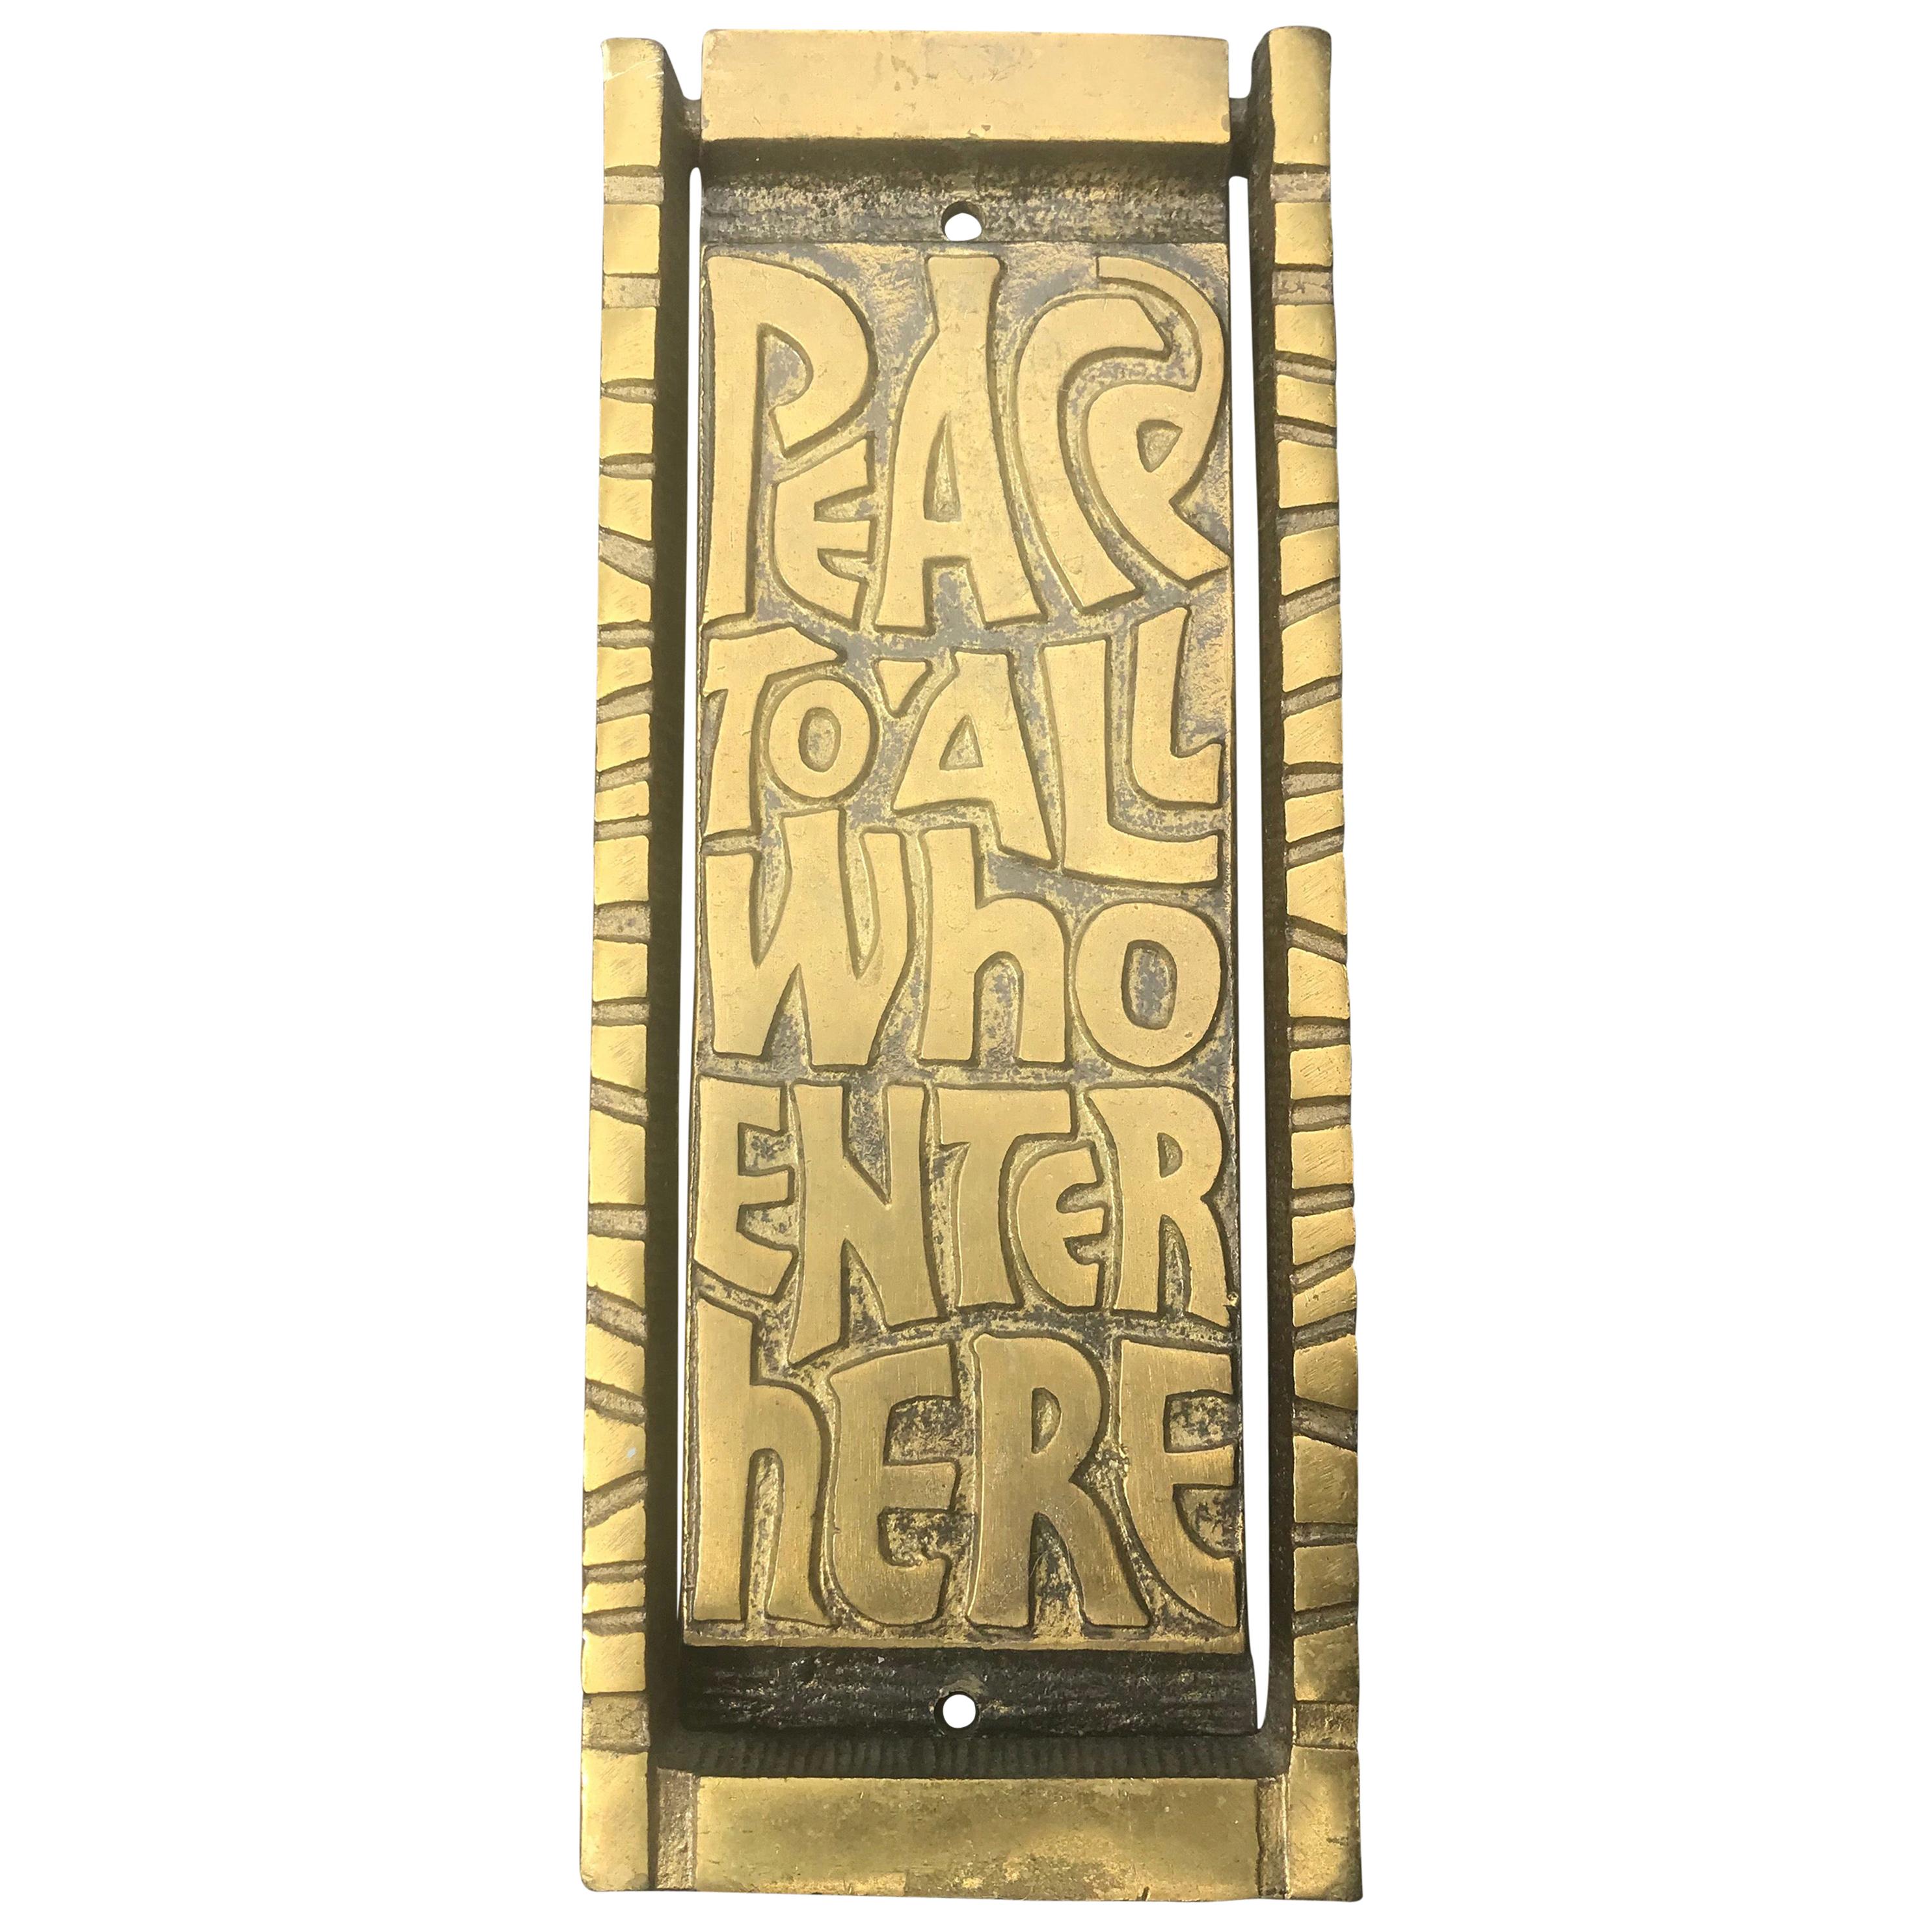 Midcentury Bronze Door Knocker "Peace to All Who Enter Here", 1969